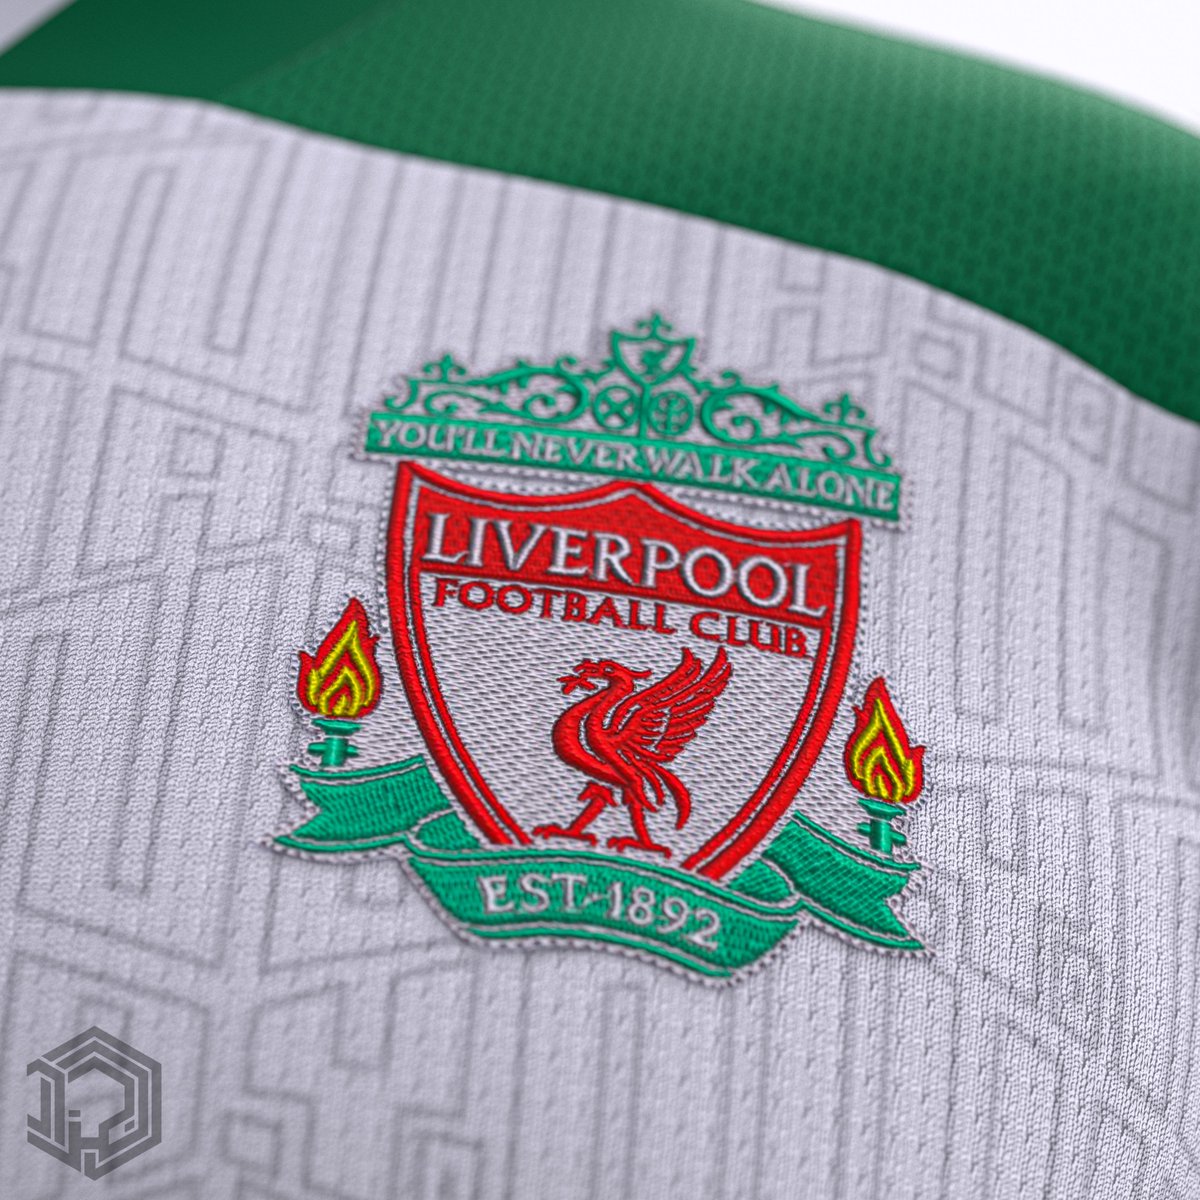 Liverpool 
fantasy jersey 
@LFC_Arabic @LFC @adidas @adidasfootball @adidasoriginals @CLO3D @EPLworld